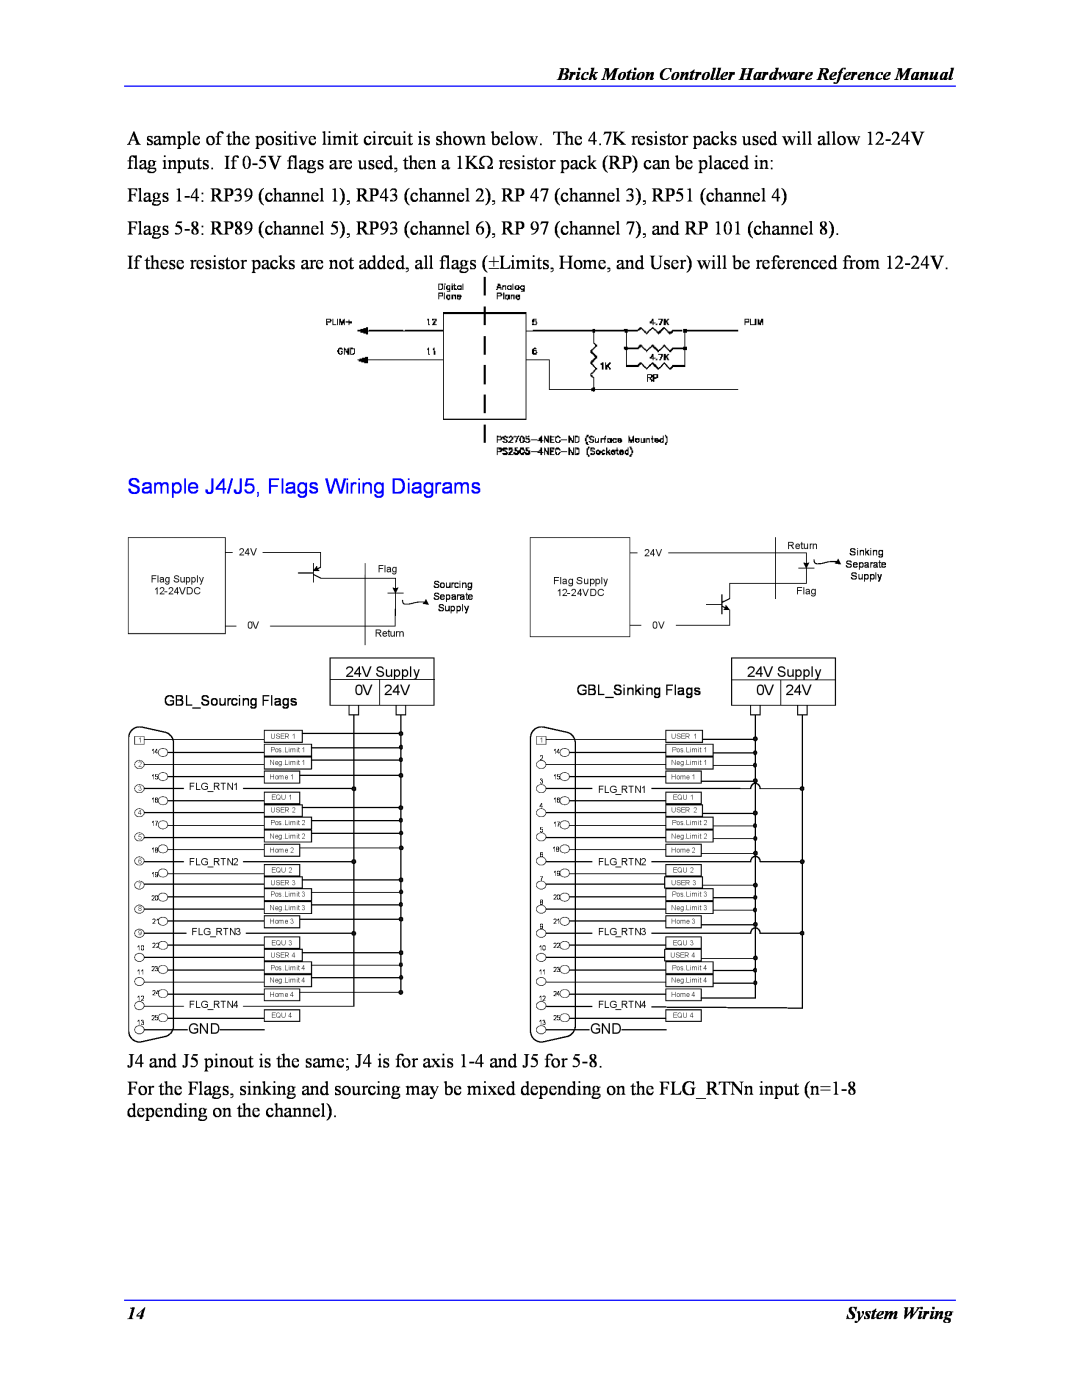 Delta Tau 5xx-603869-xUxx manual Sample J4/J5, Flags Wiring Diagrams 